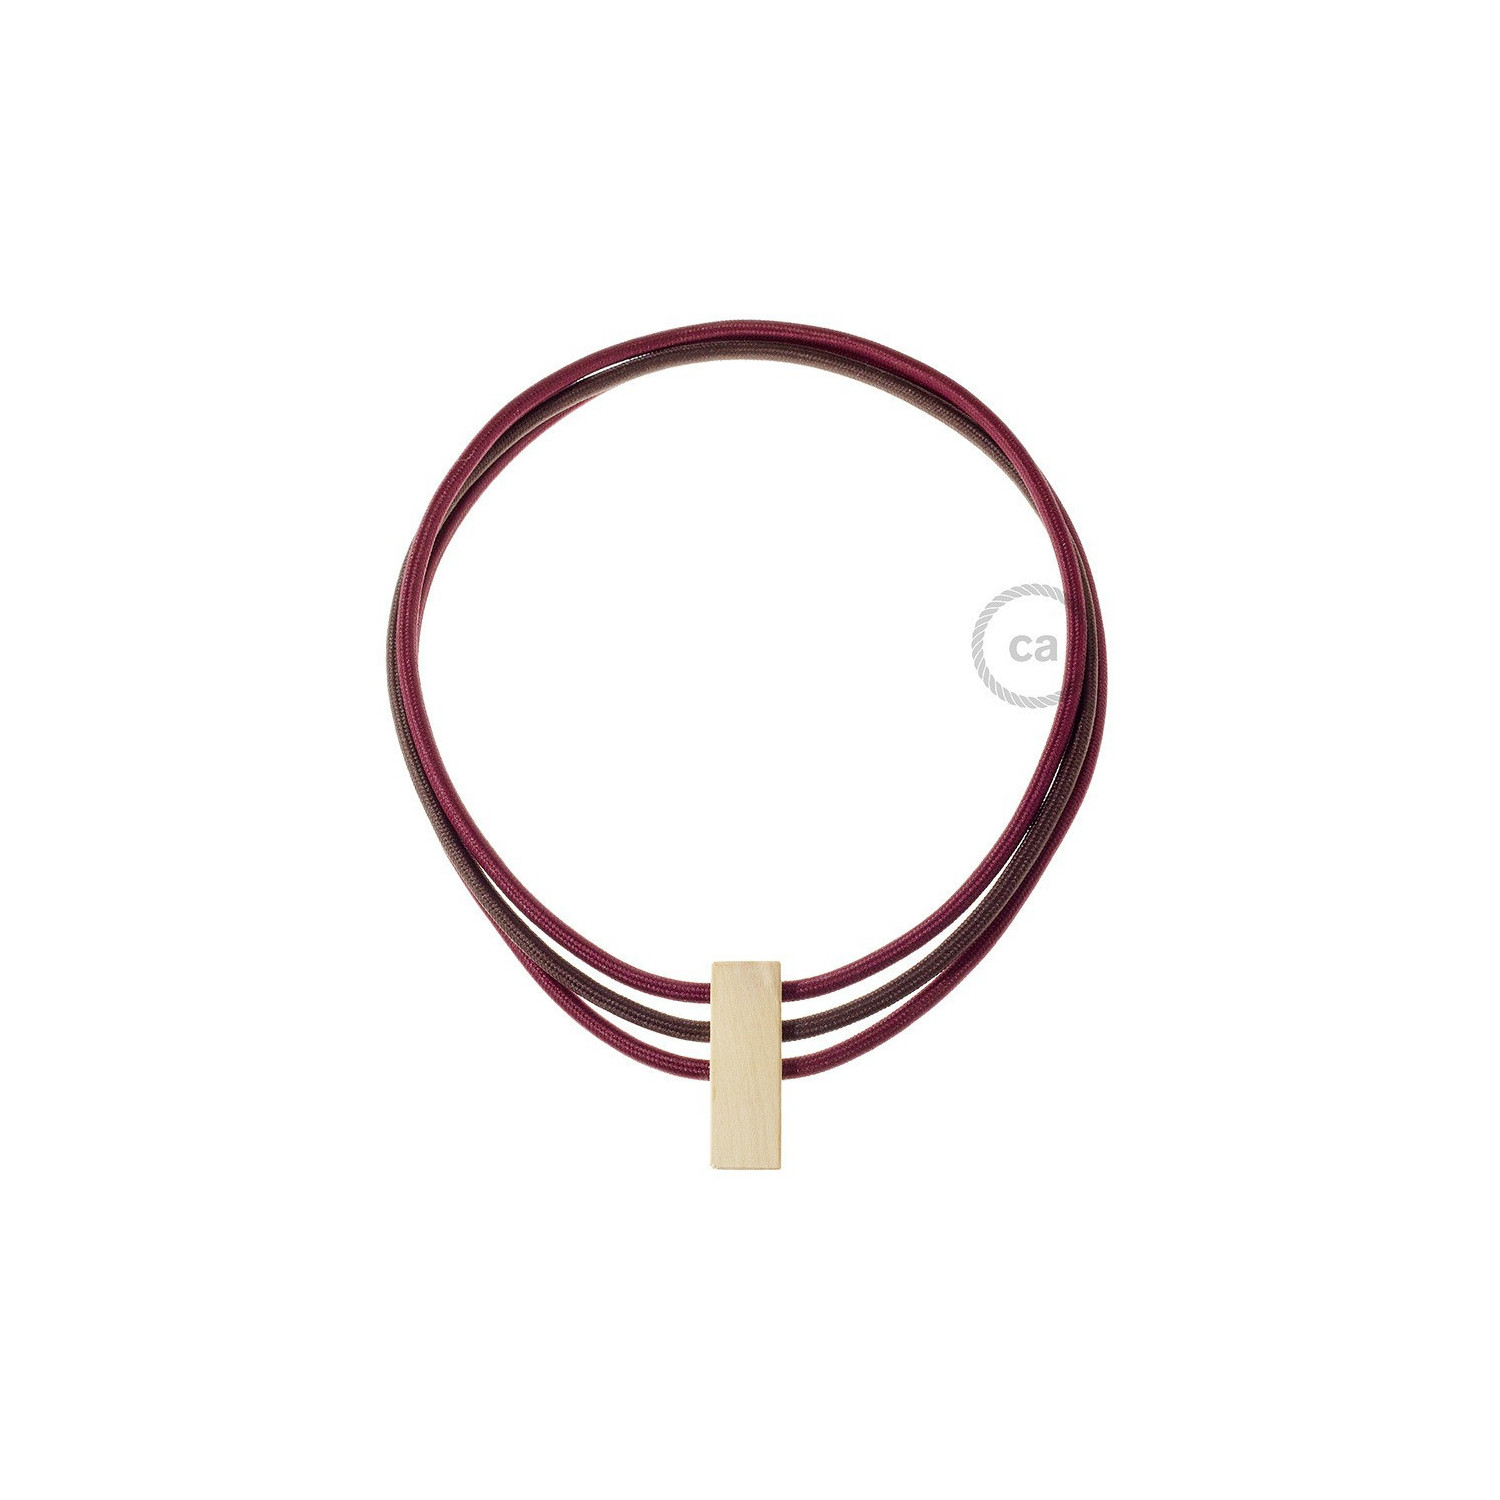 Collana Circles colori: Bordeaux RM19, Marrone RM13 e Bordeaux RM19.